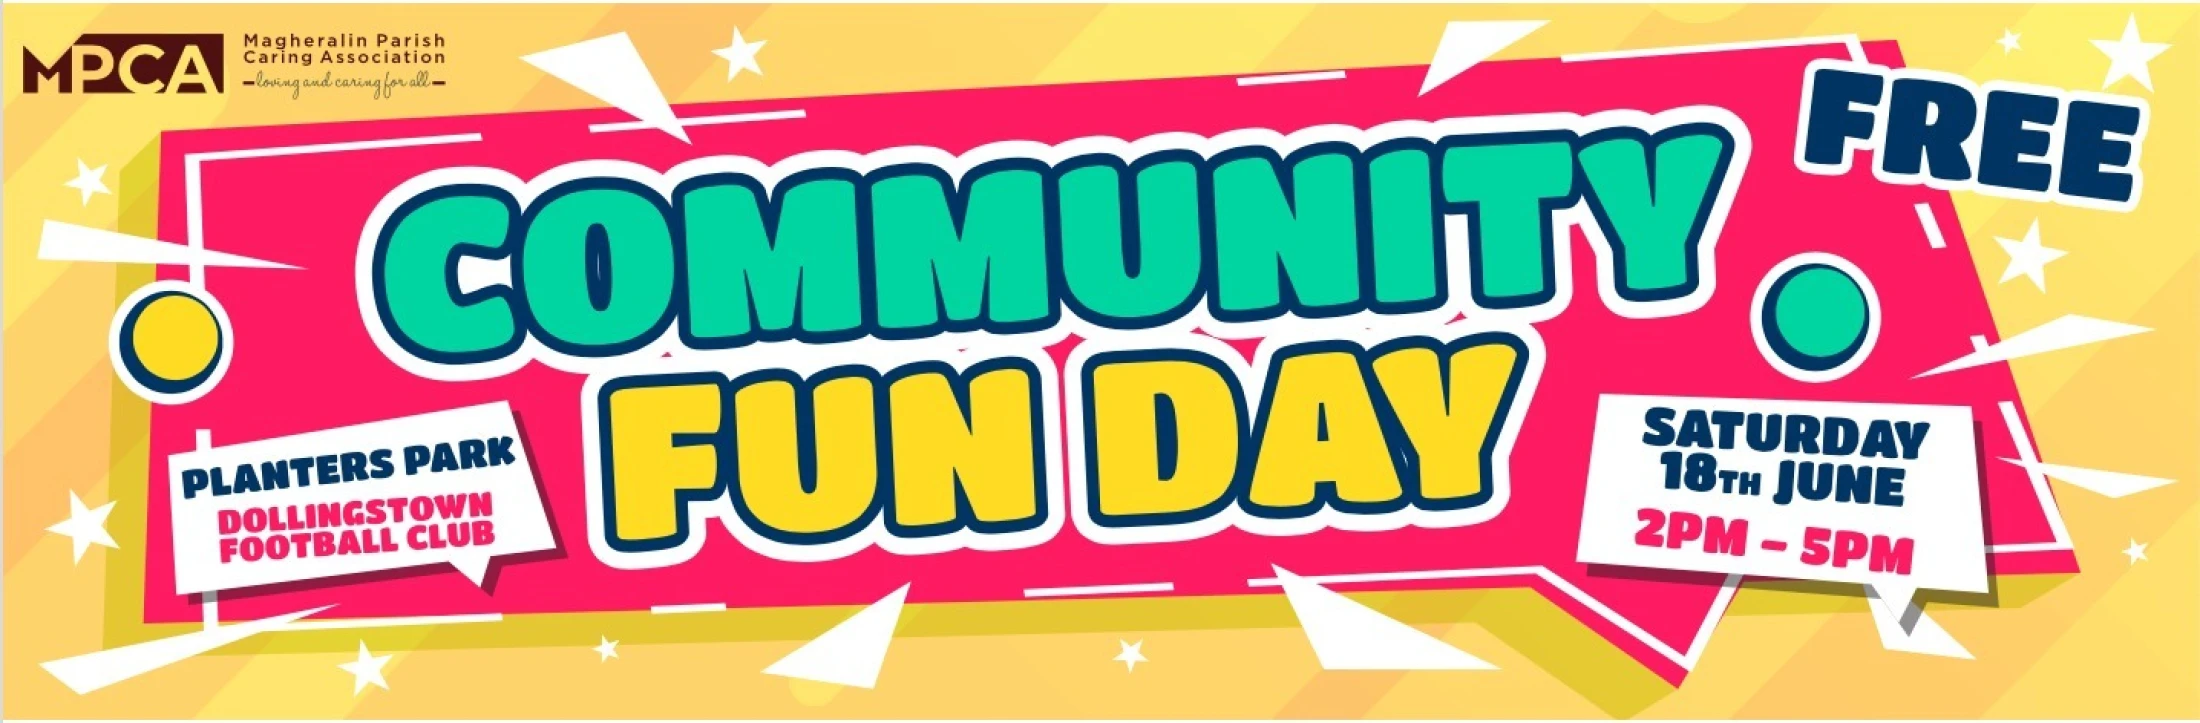 Free Community Fun Day this Saturday!